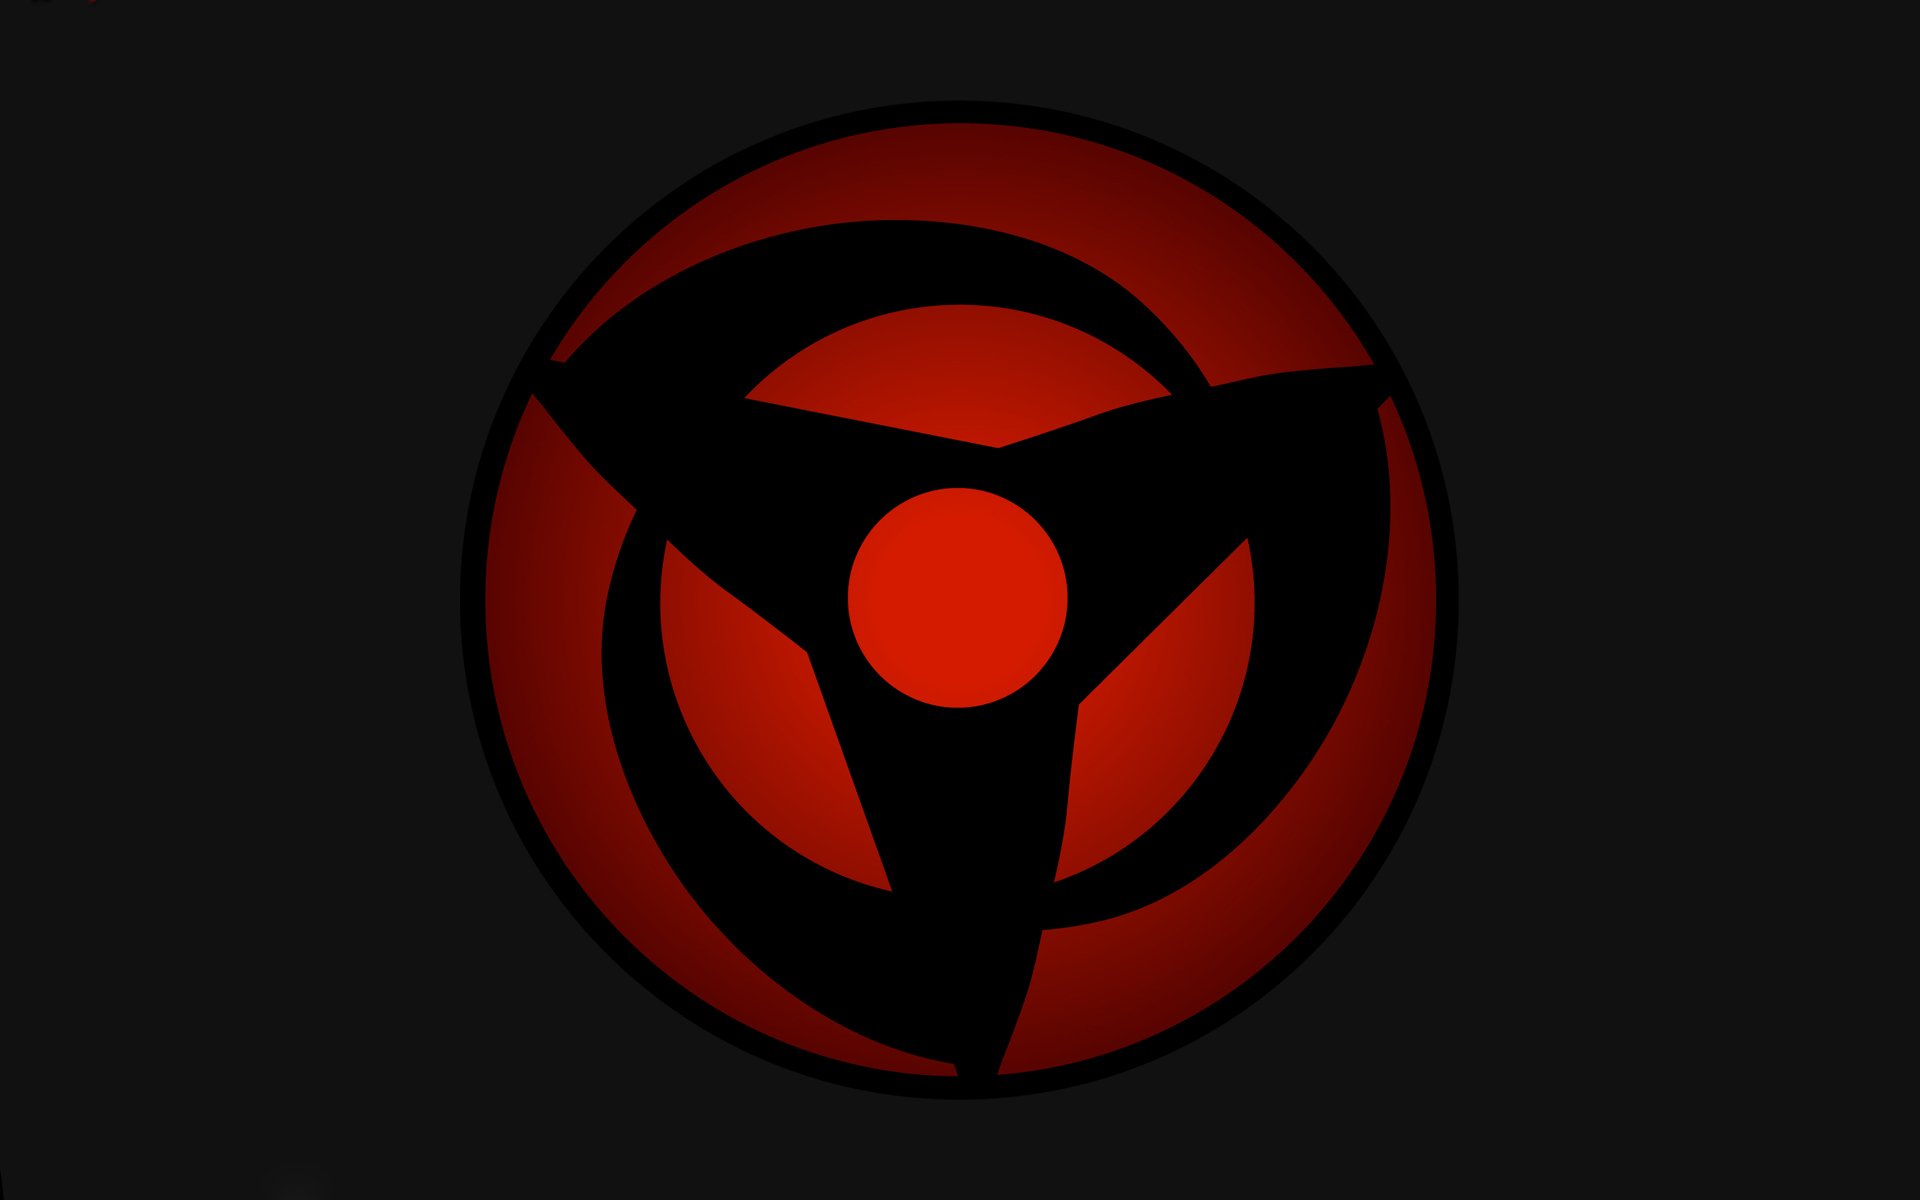 sharingan wallpaper,red,logo,symbol,fictional character,emblem